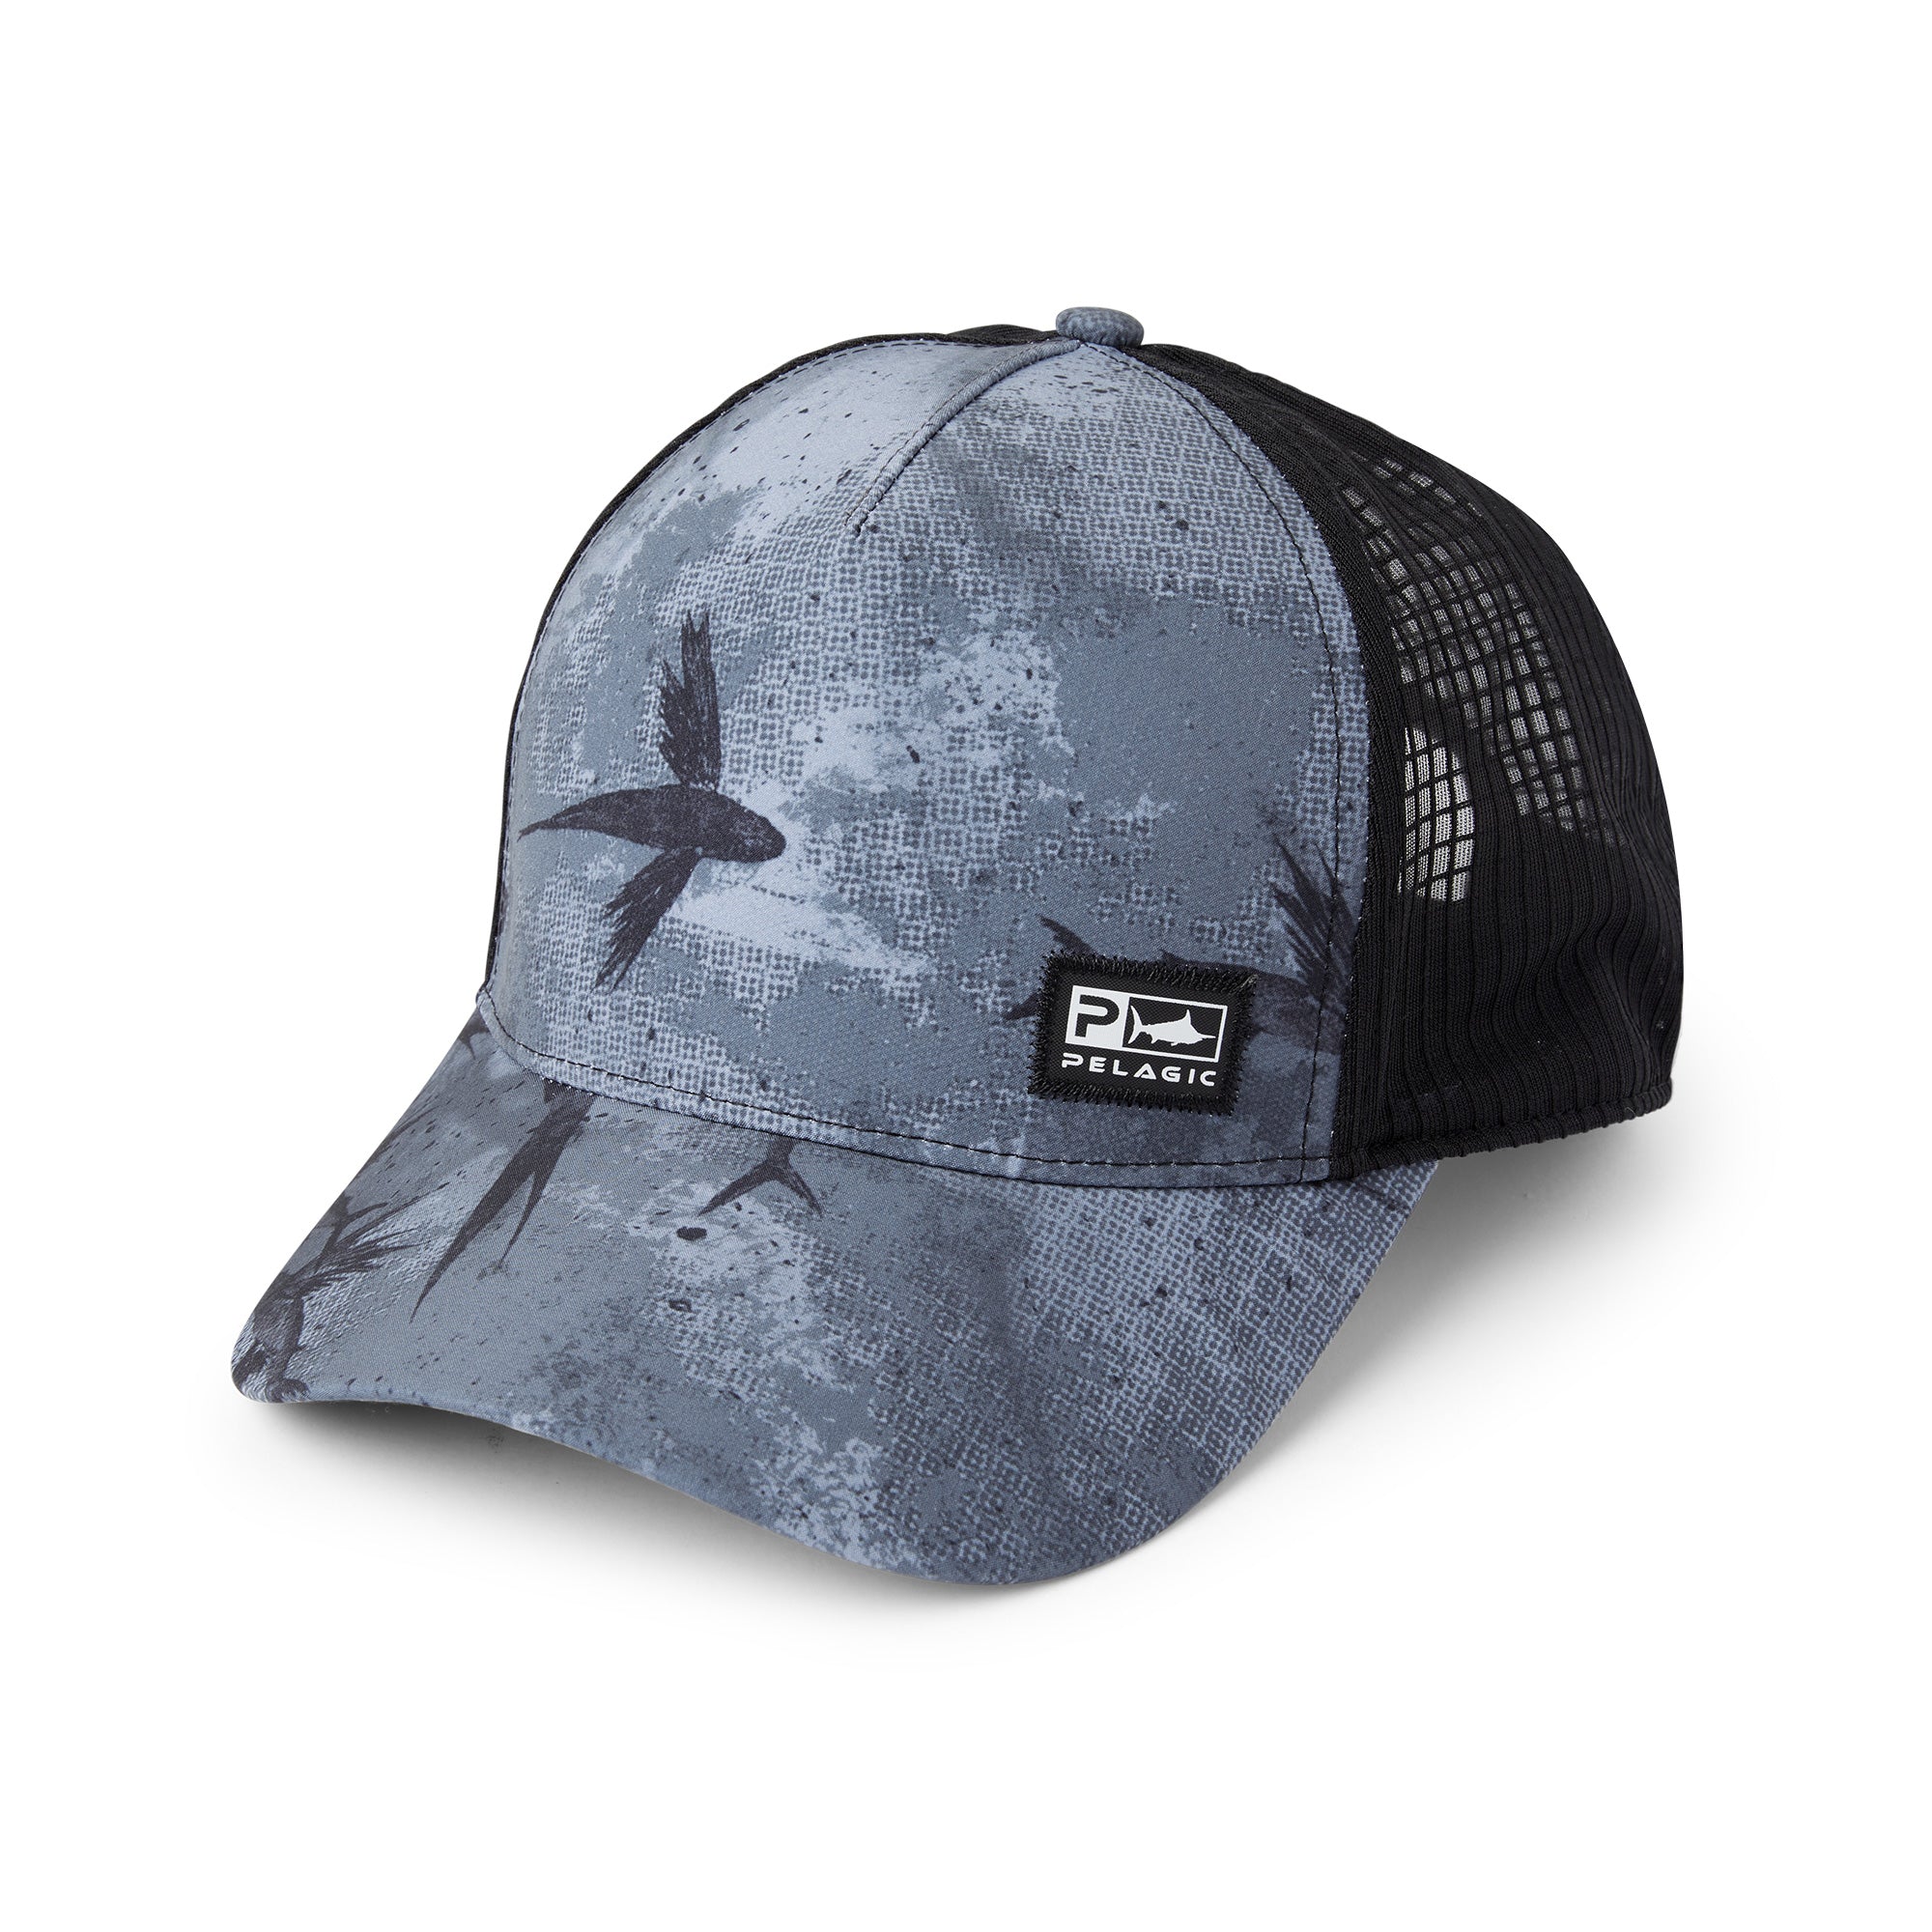 Performance Fishing Pelagic Trucker Hat Merchandise Men Baseball